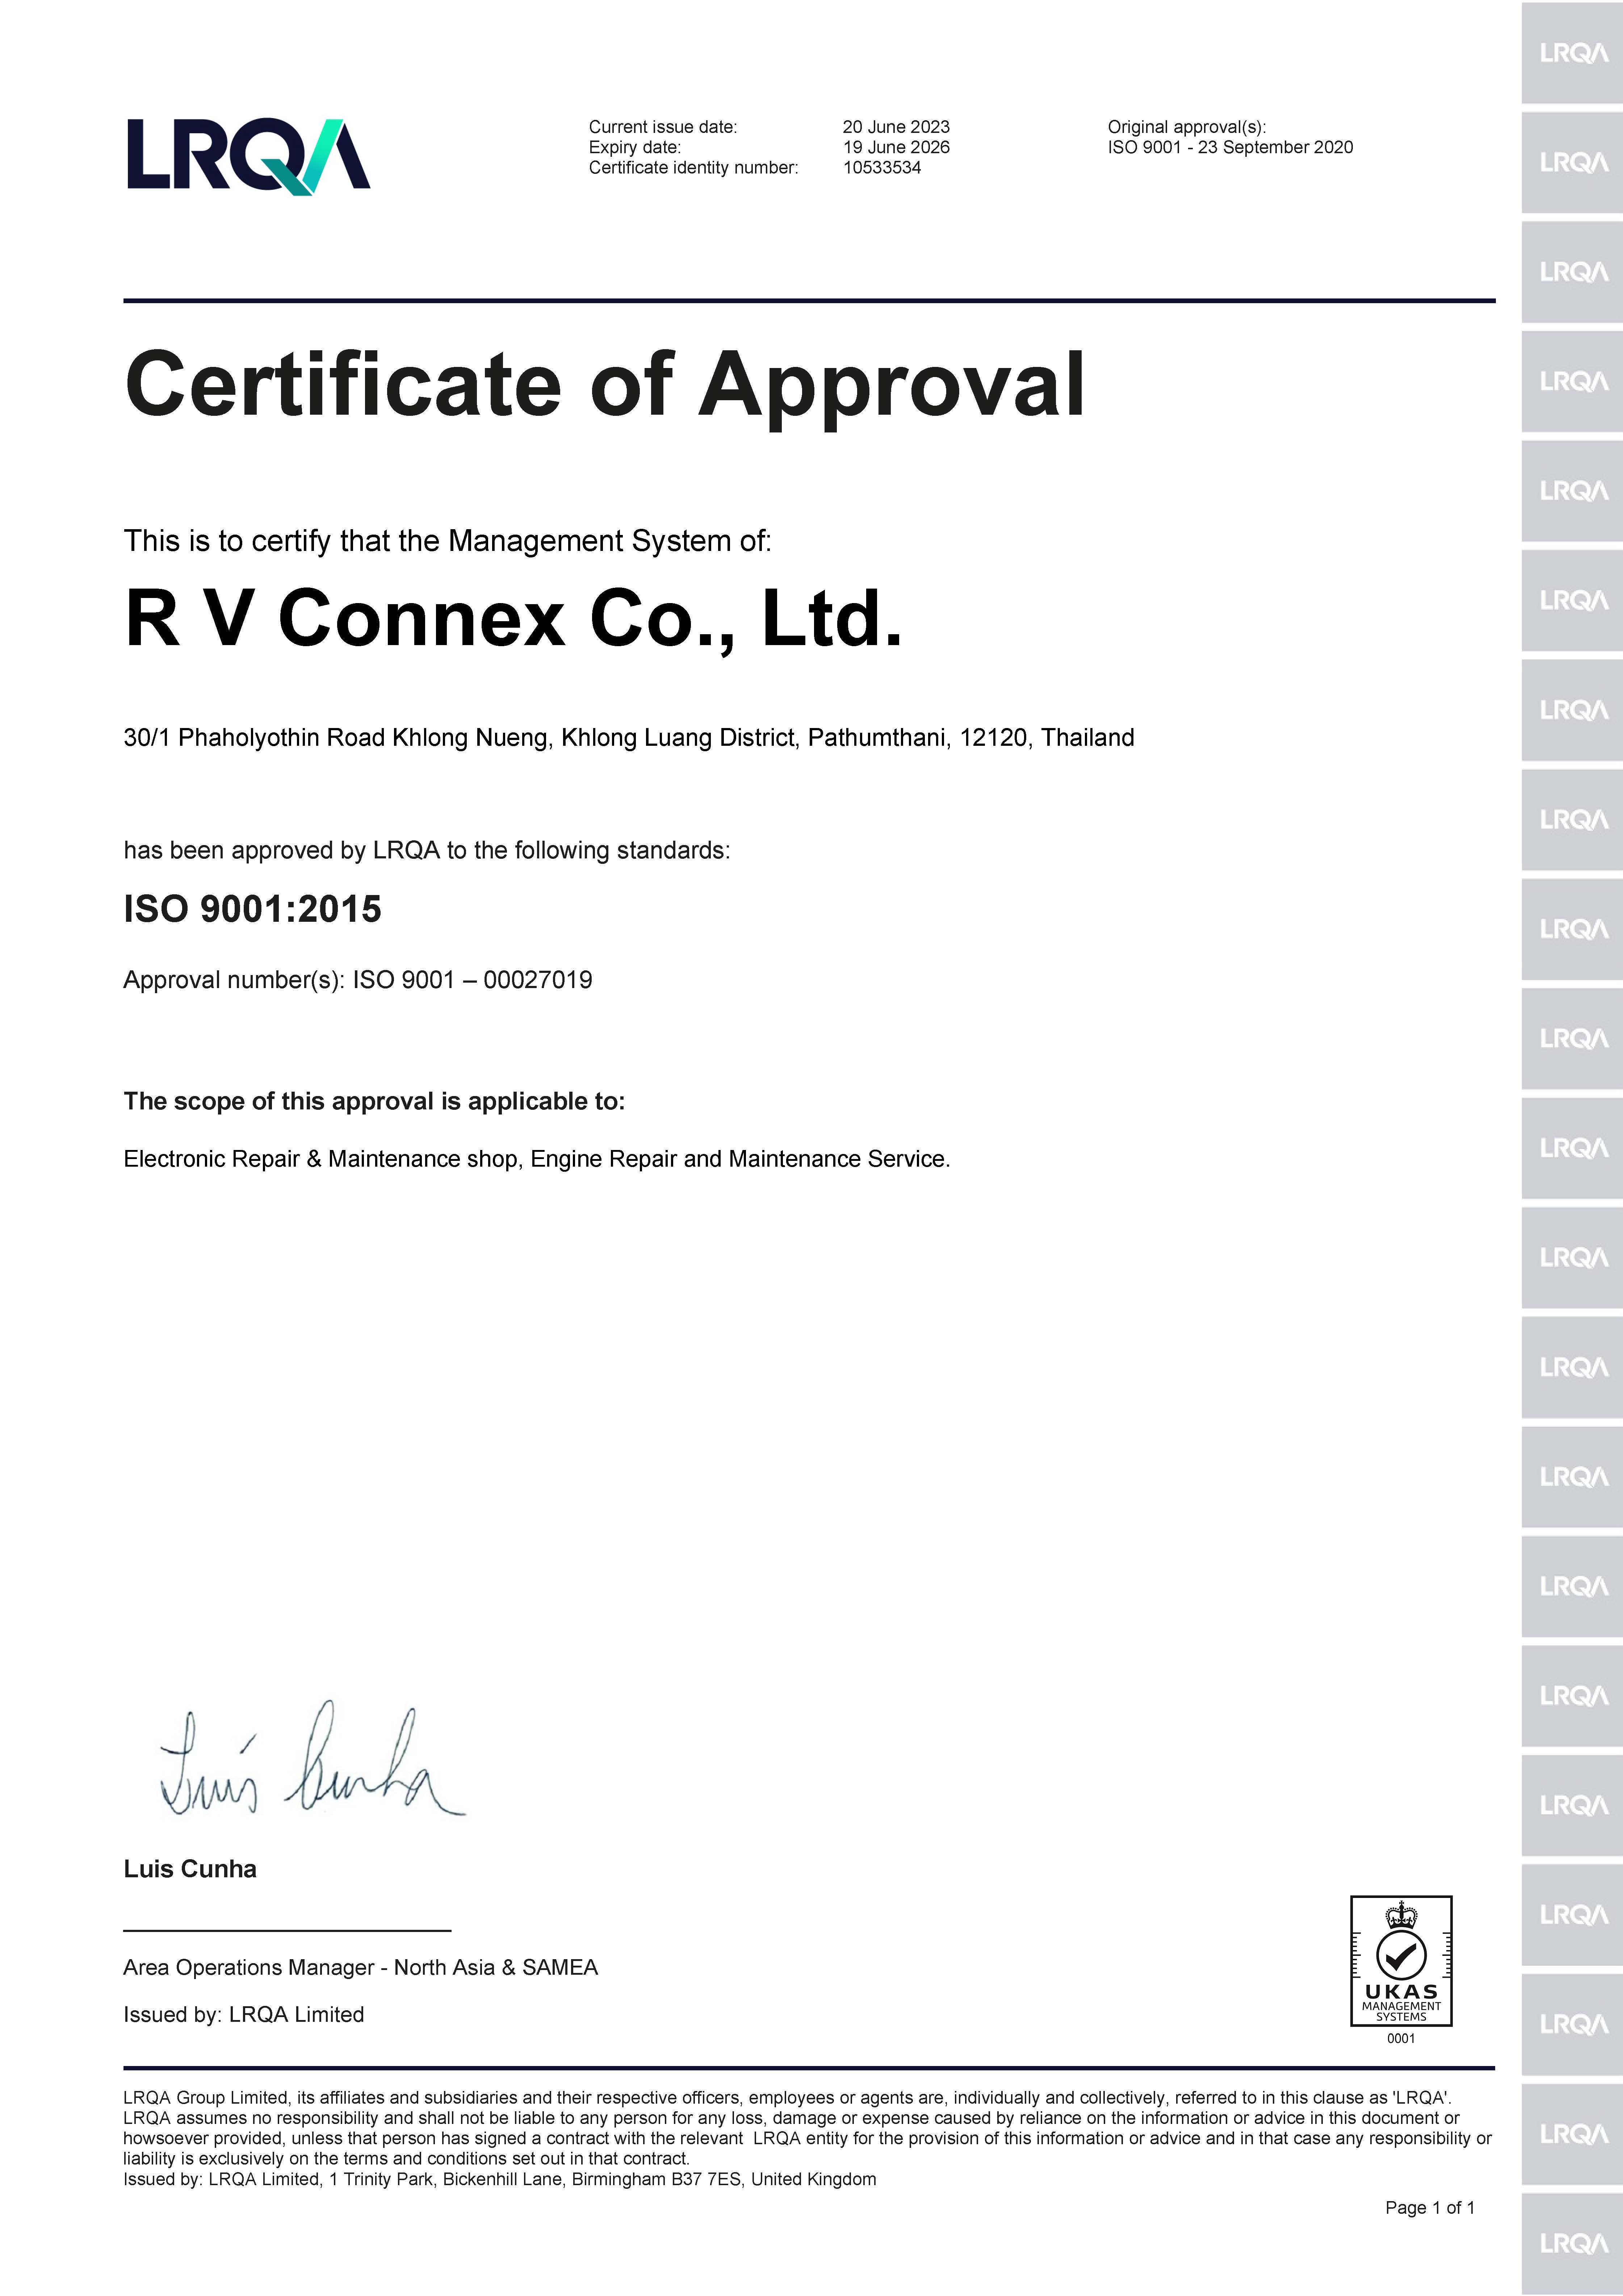 Standard Certificate ISO9001:2015